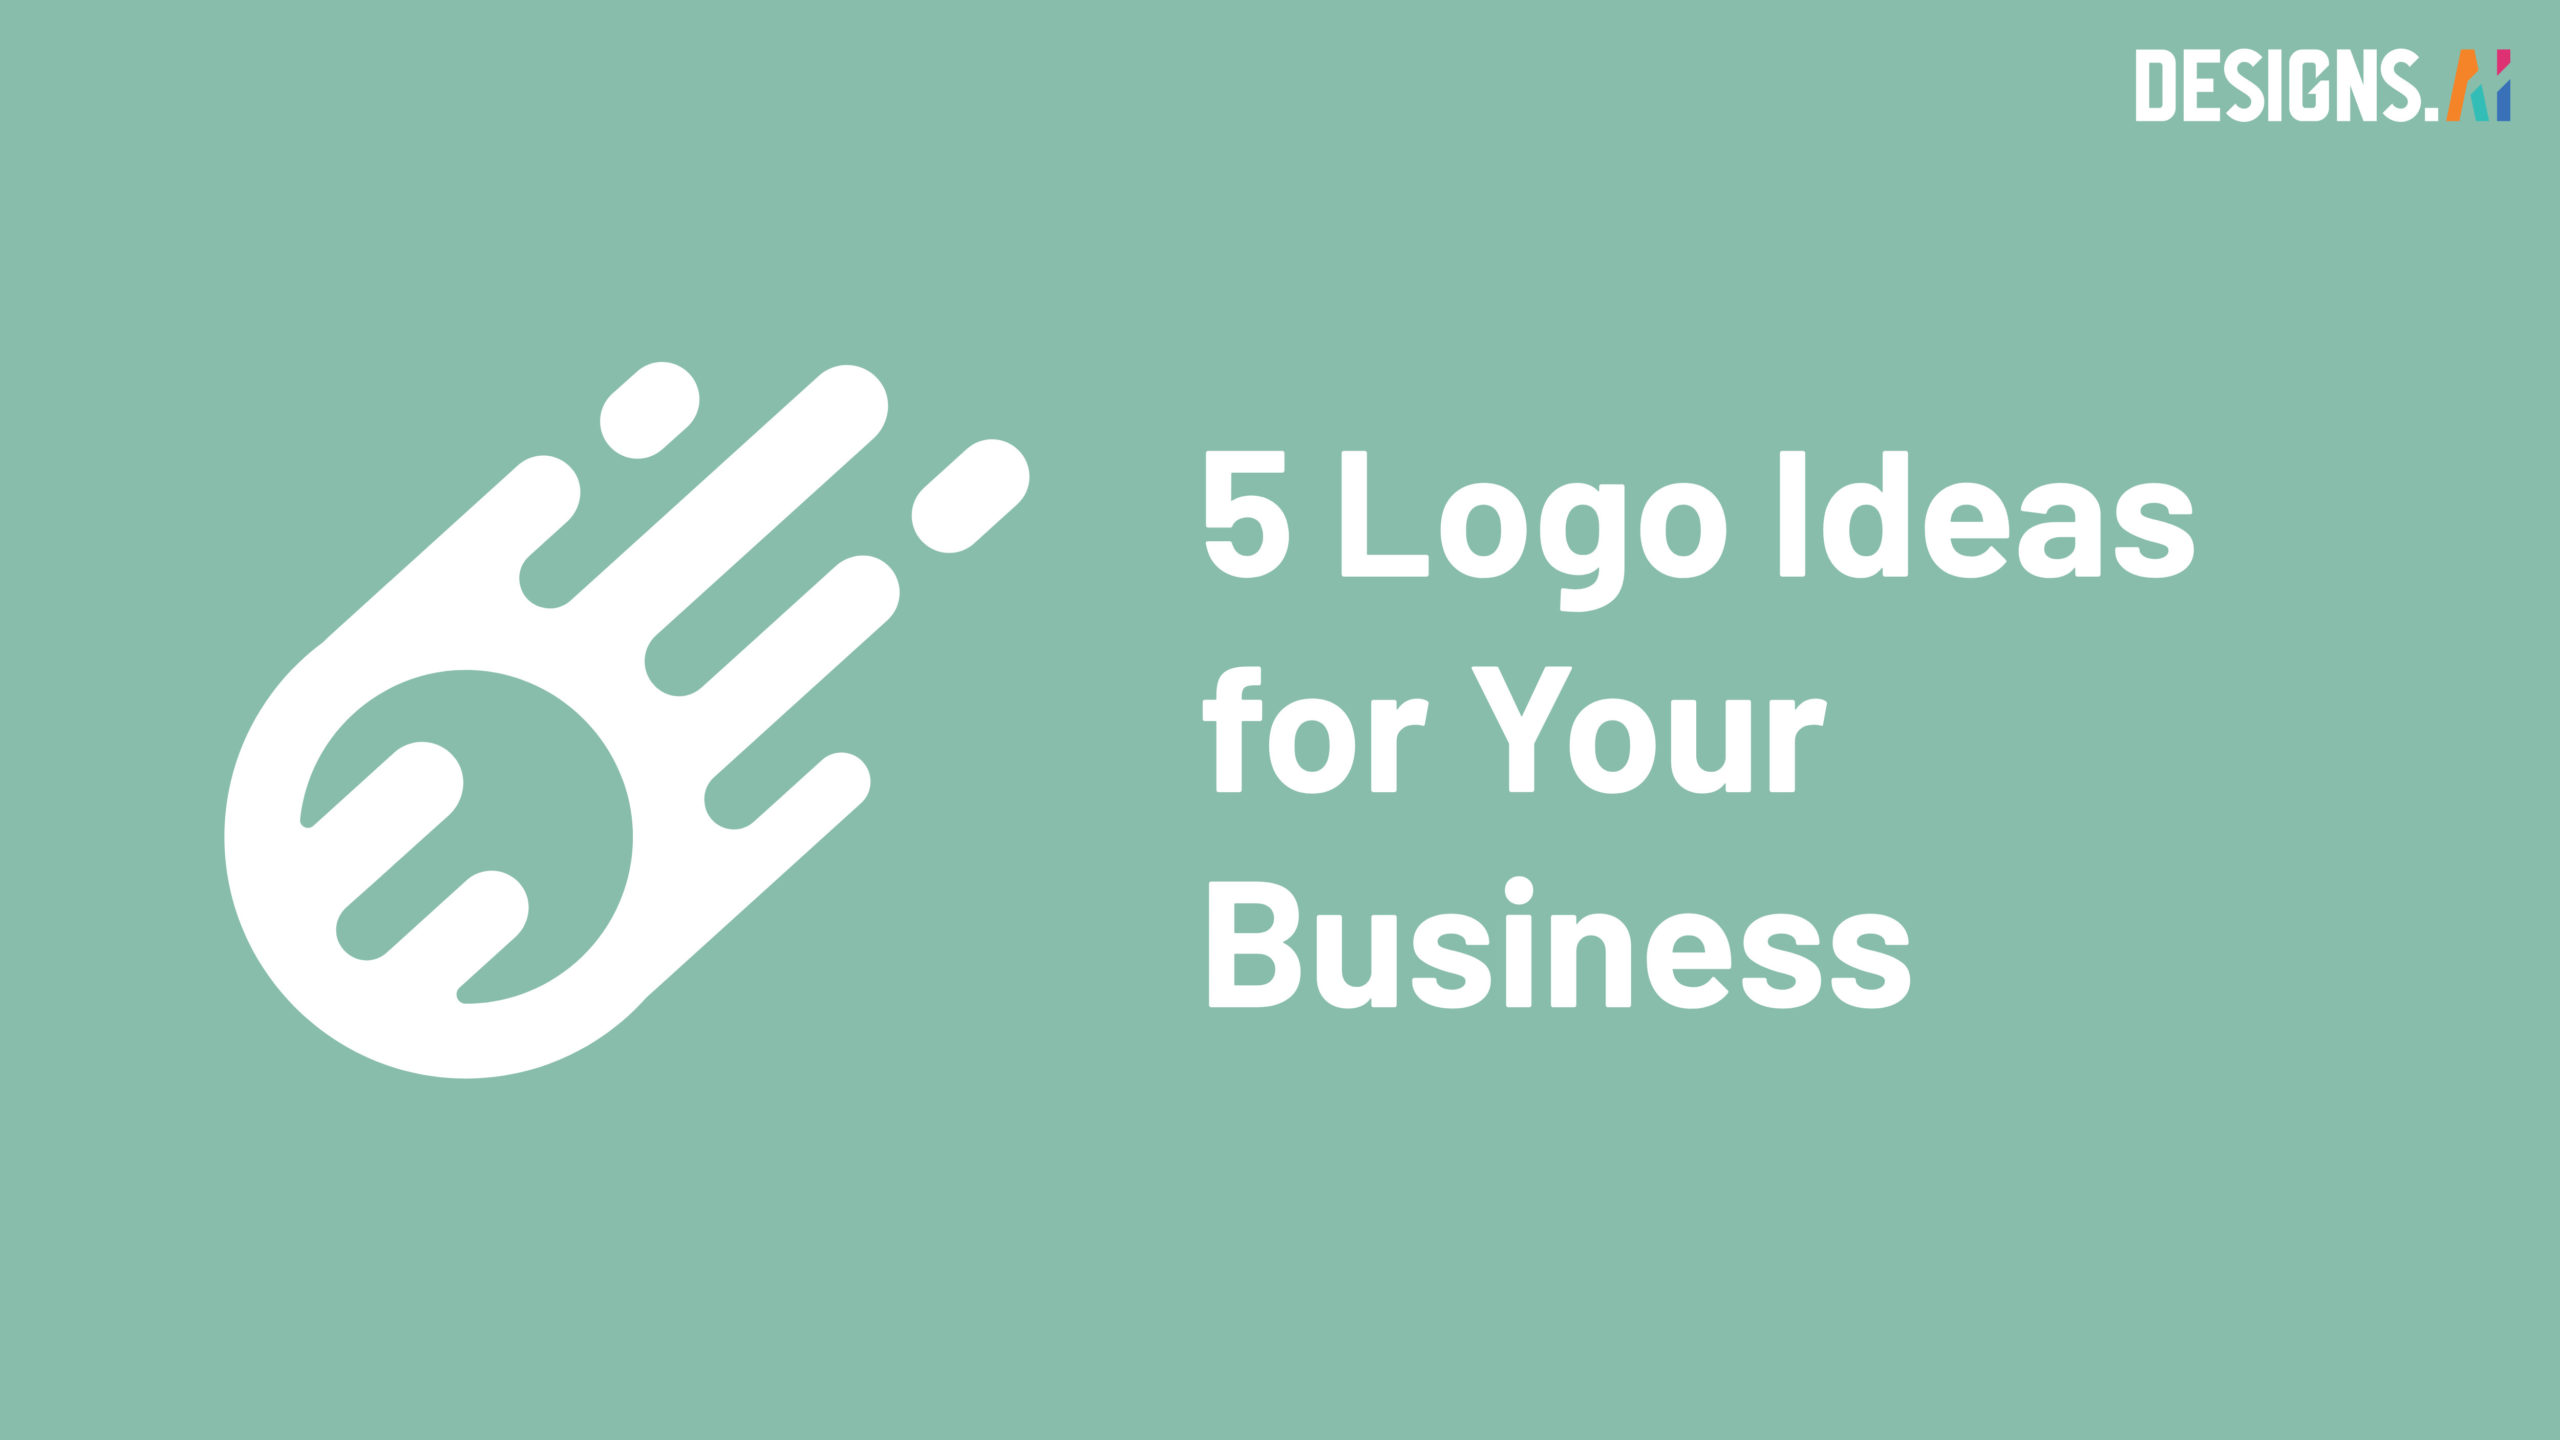 5 Logo Ideas for Your Business - Designs.ai